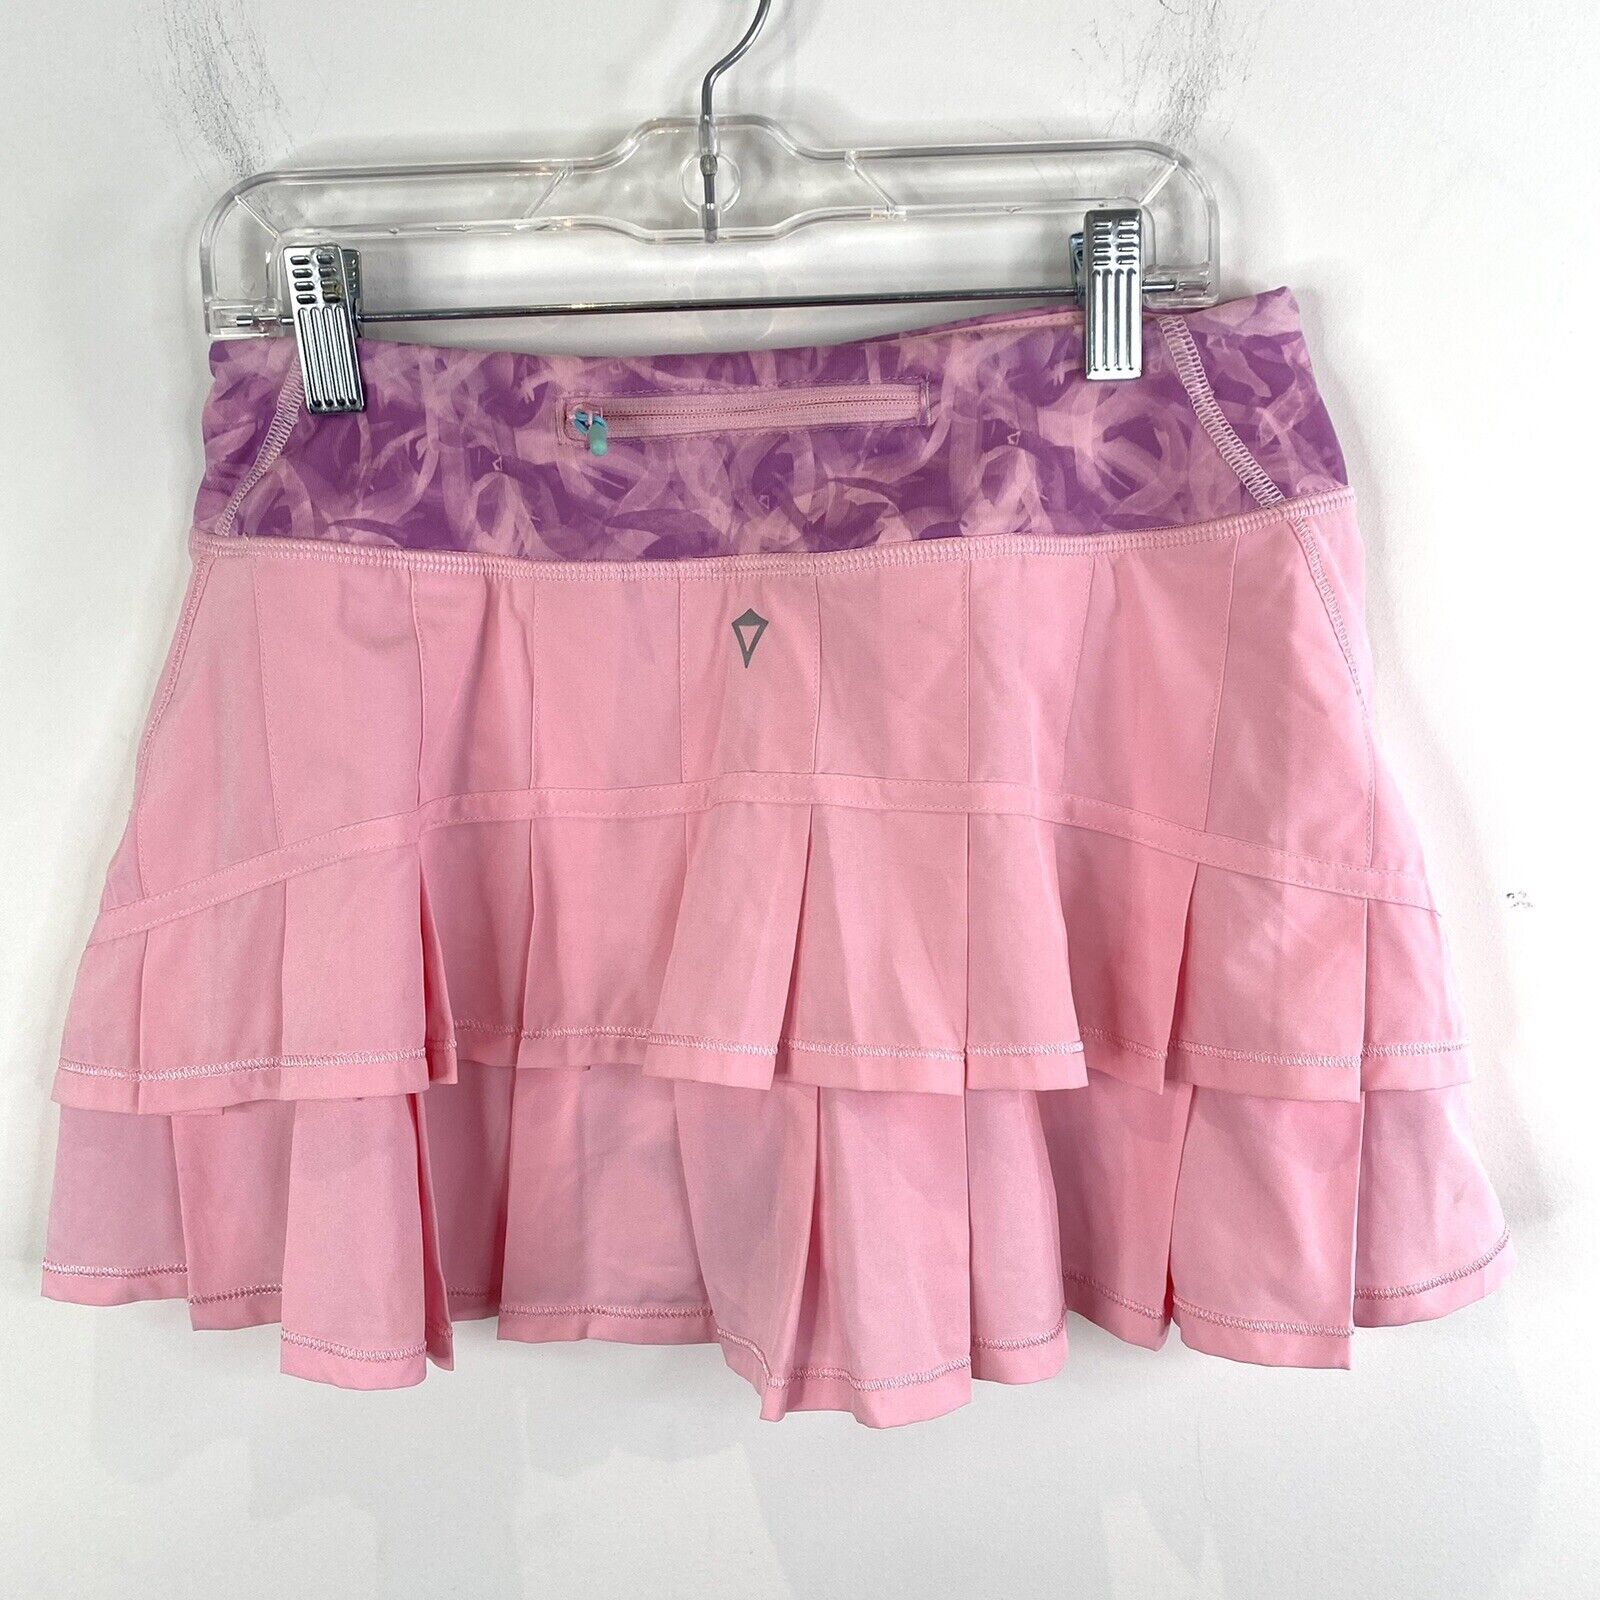 Ivivva X Lululemon Girls Size 14 Set The Pace Skirt Skort Pleated Tennis Golf